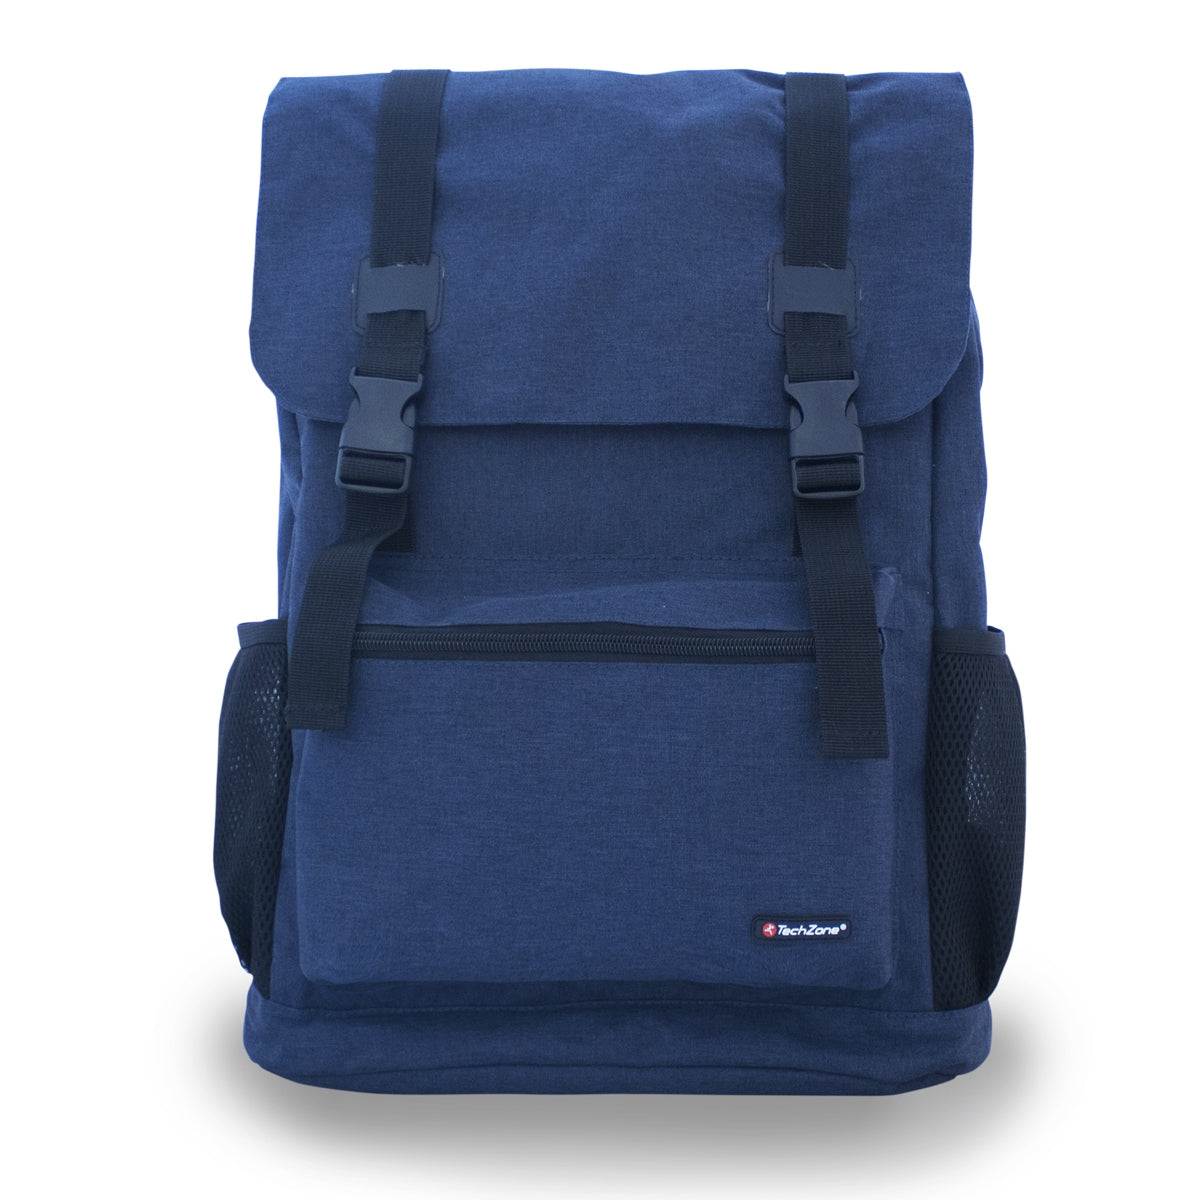 Backpack Techzone Tz19Lbp01 15.6 Pulgadas Mochila Azul